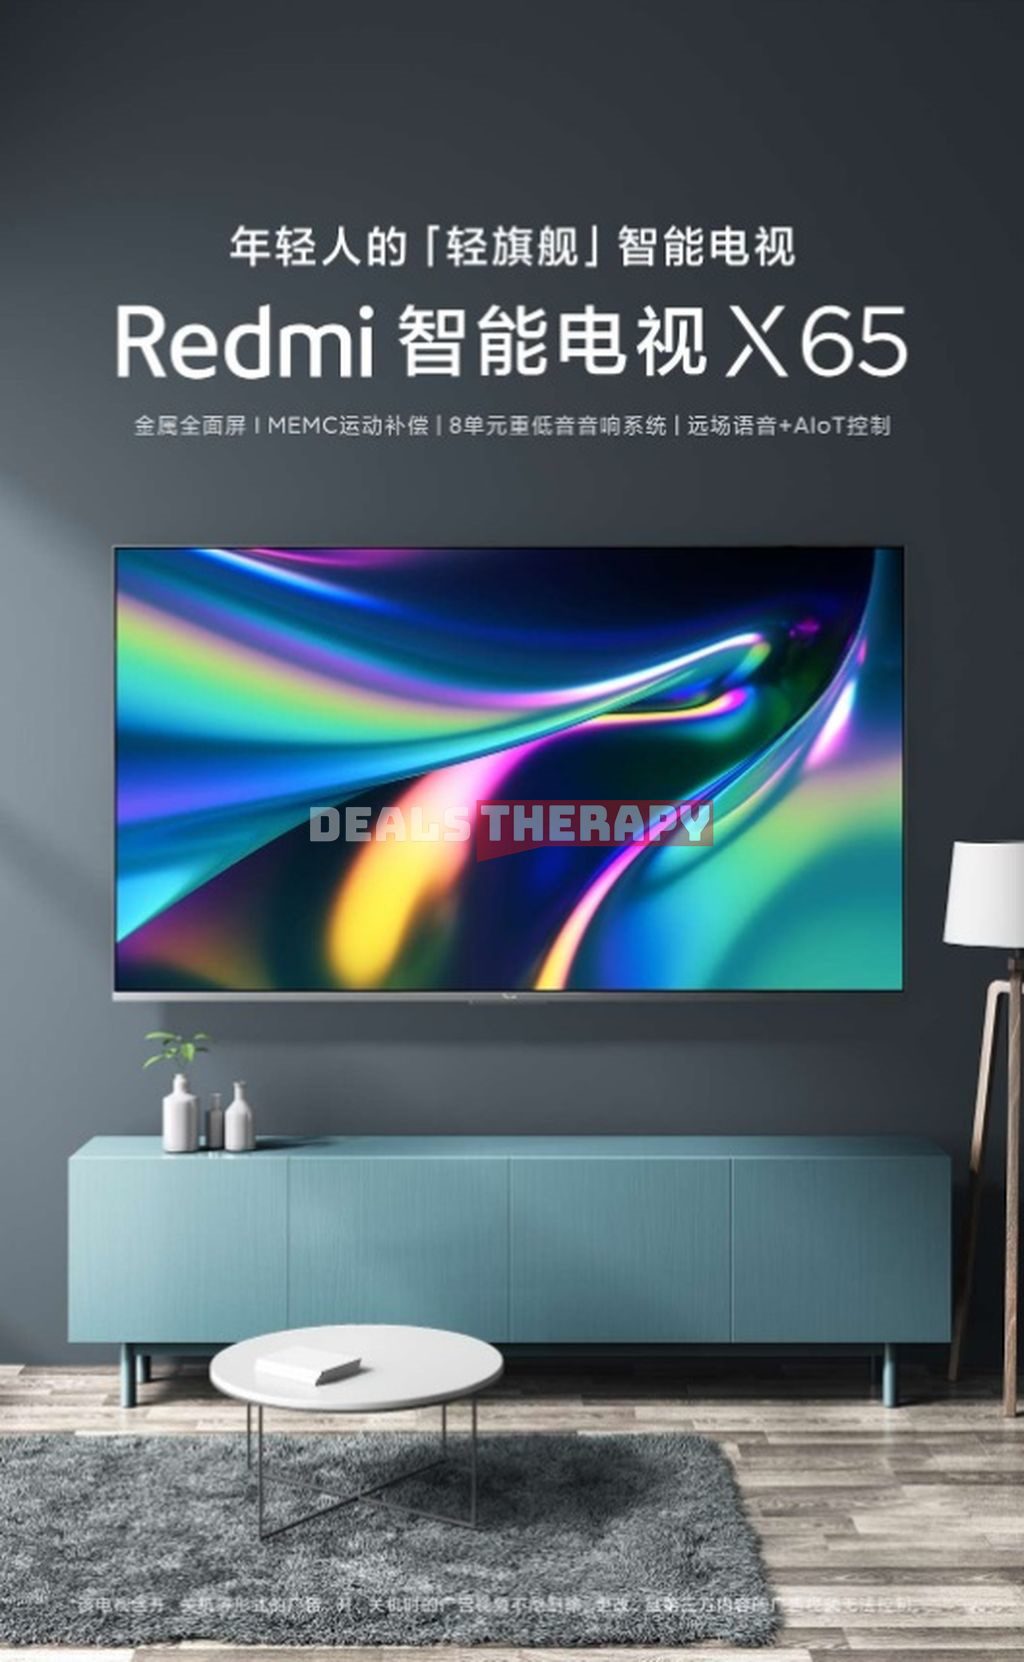 Xiaomi Redmi Smart TV X65